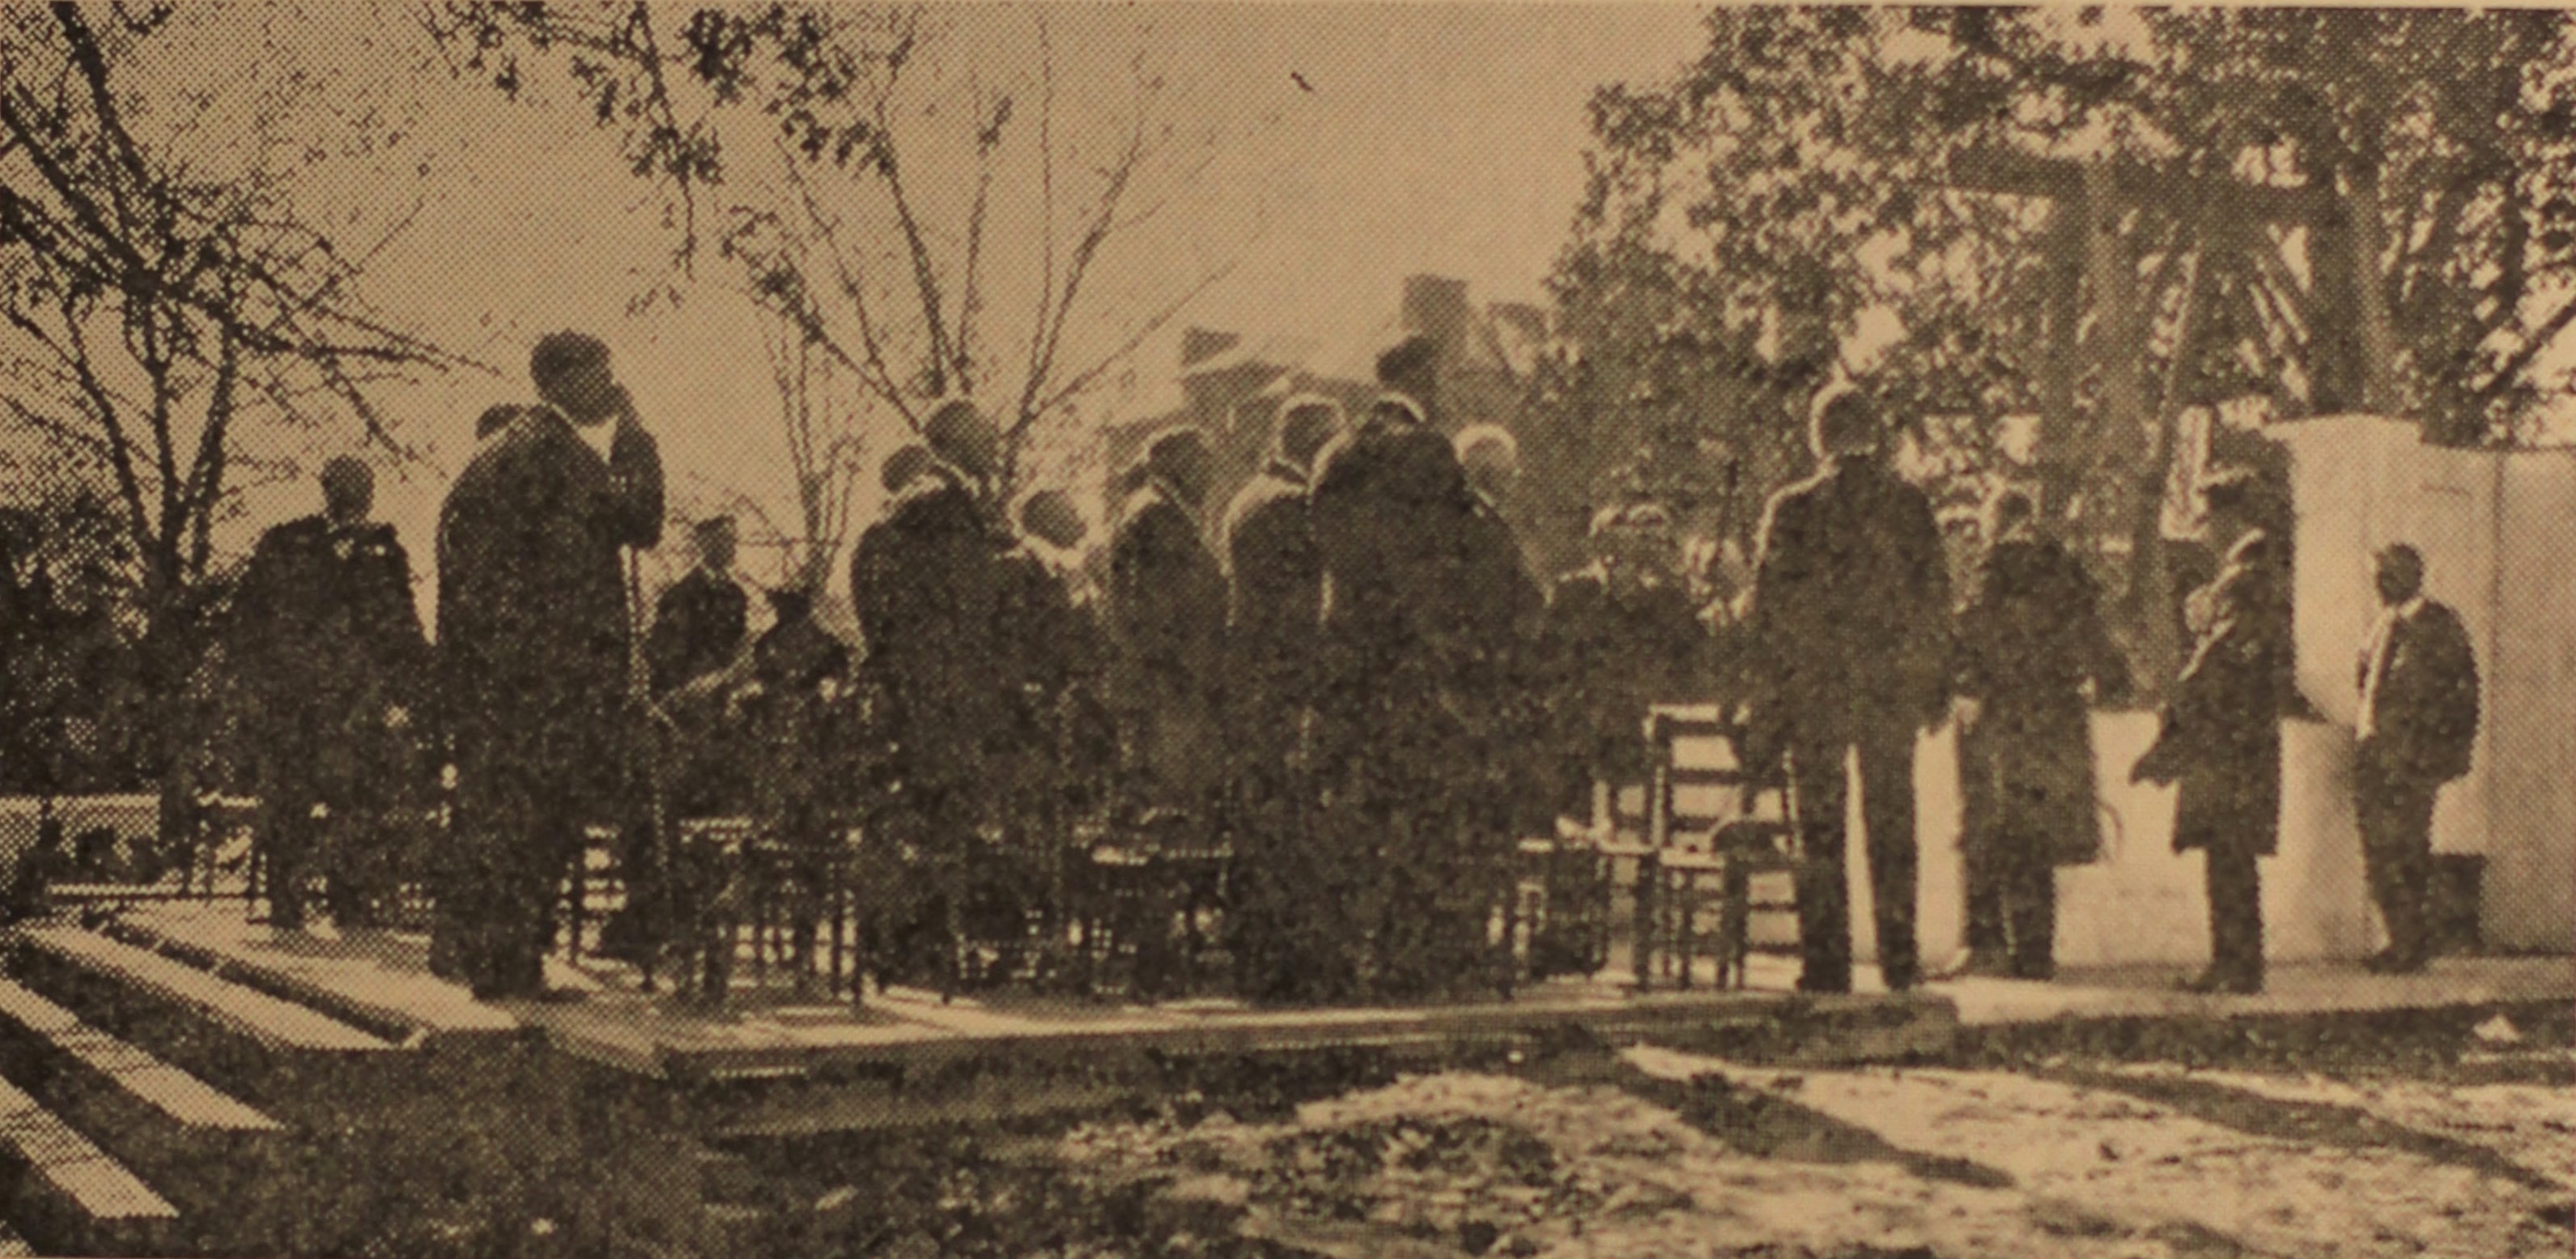 Dedication of NC State University's Memorial Belltower, 10 Nov. 1921